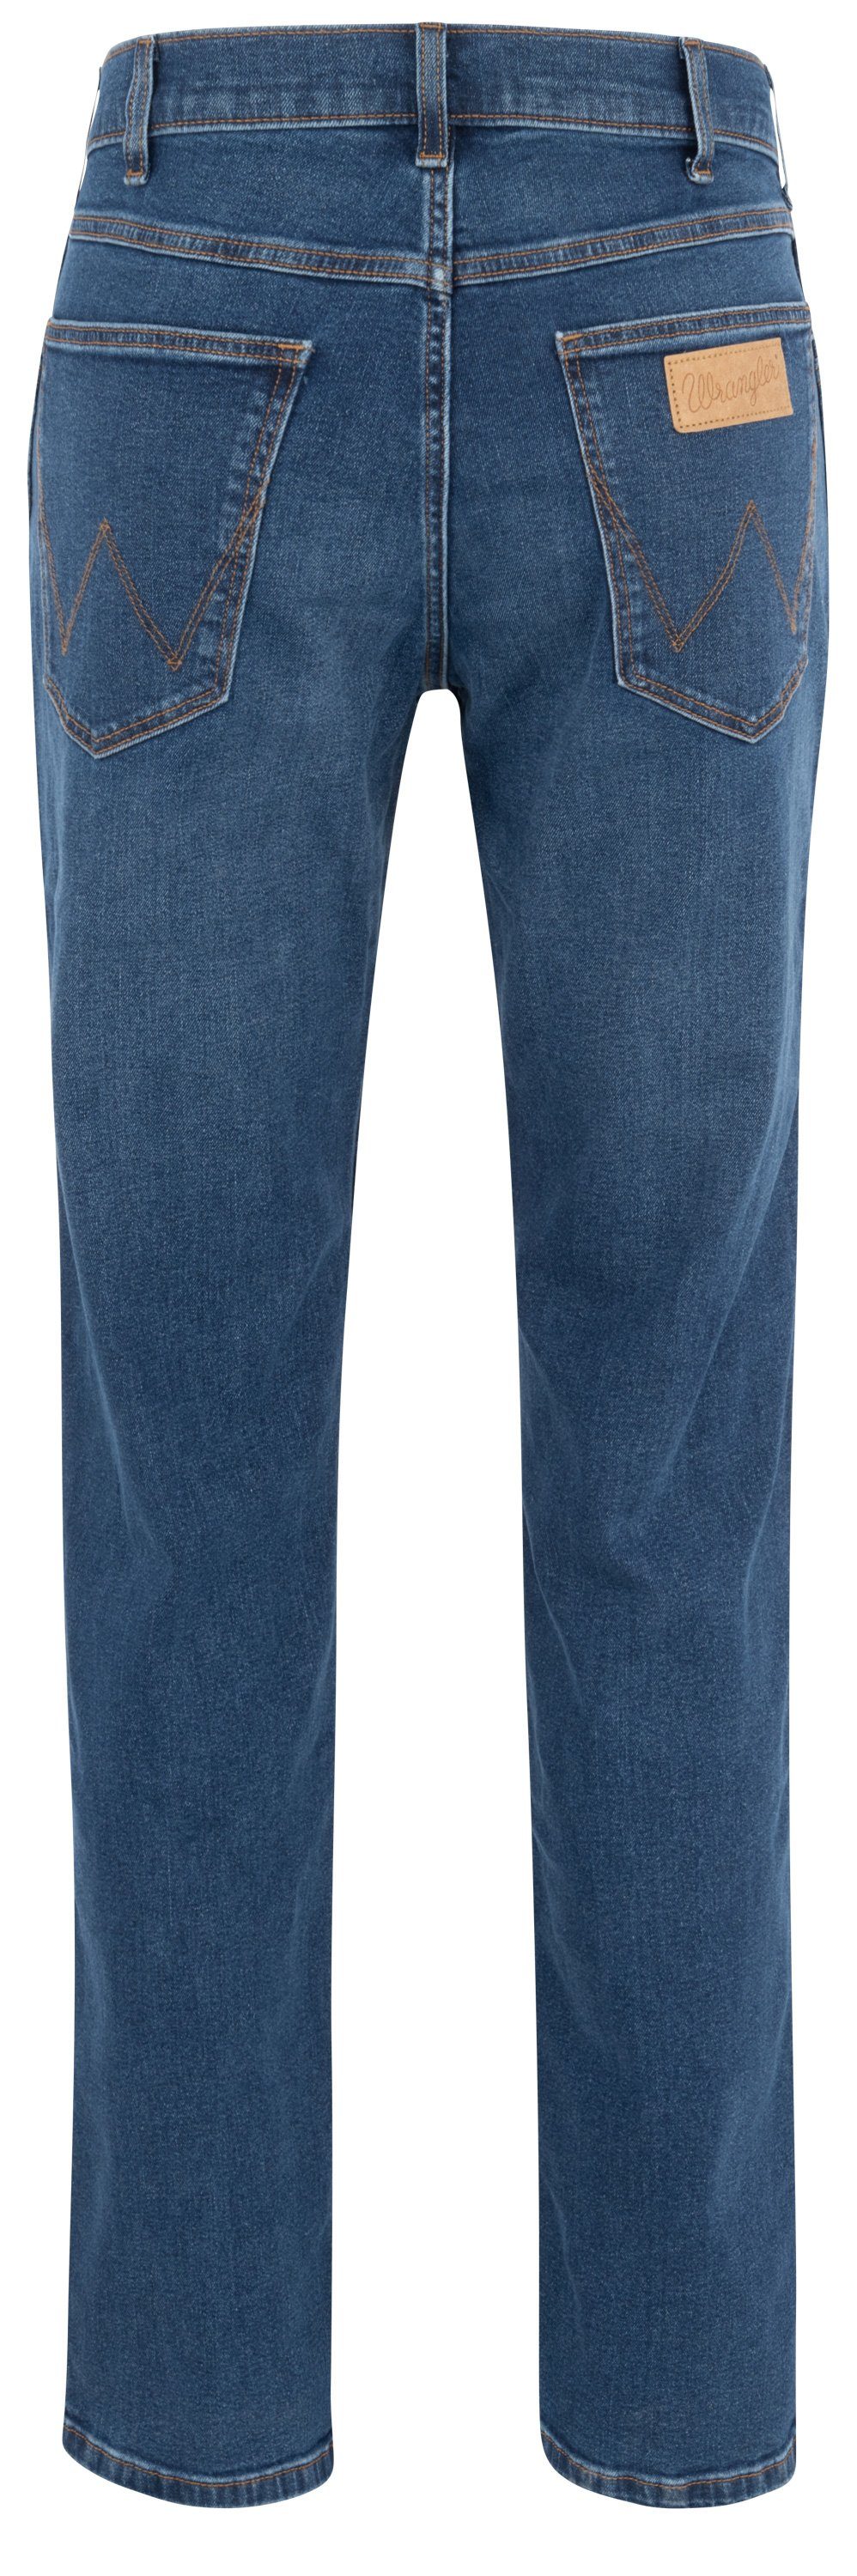 5-Pocket-Jeans Wrangler gone WRANGLER W15QOAR21 far GREENSBORO